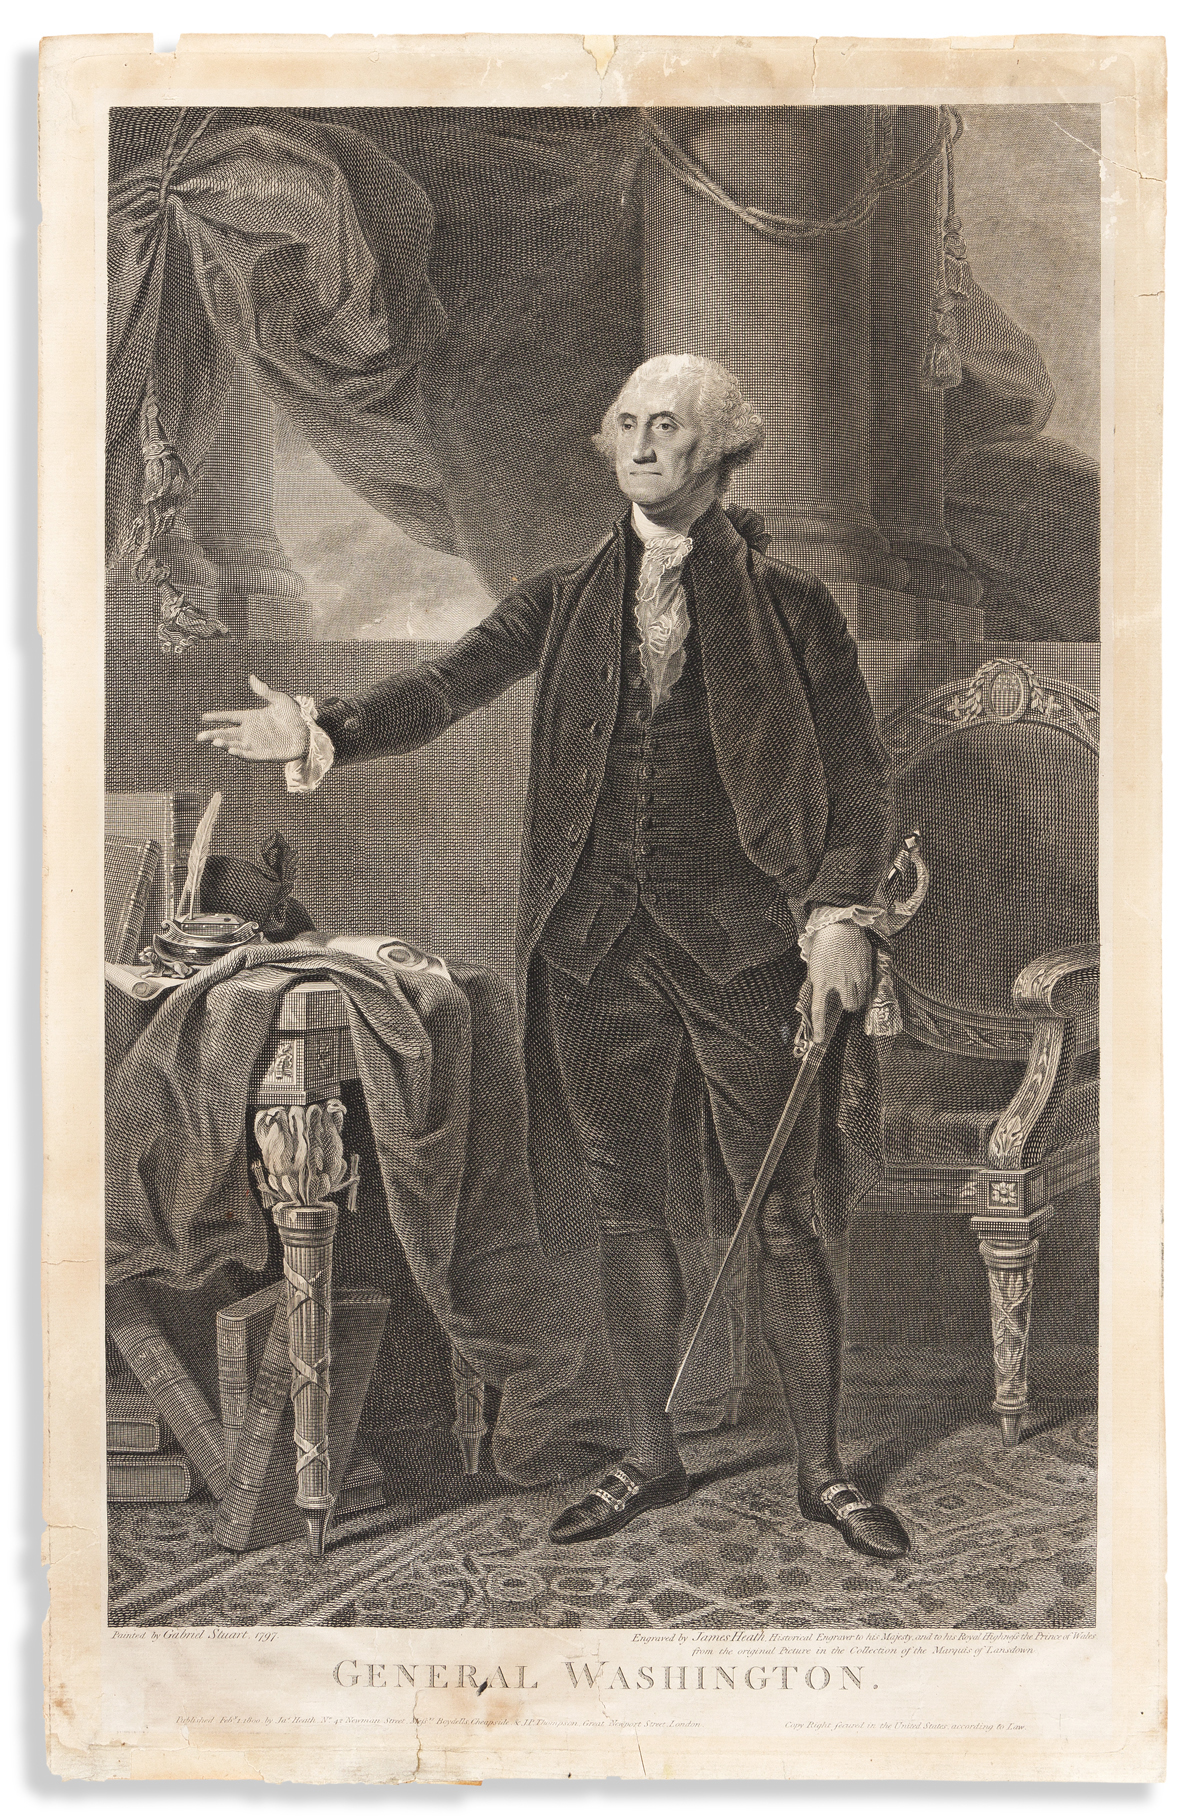 (WASHINGTON.) James Heath, engraver, after Gilbert Stuart. General Washington.